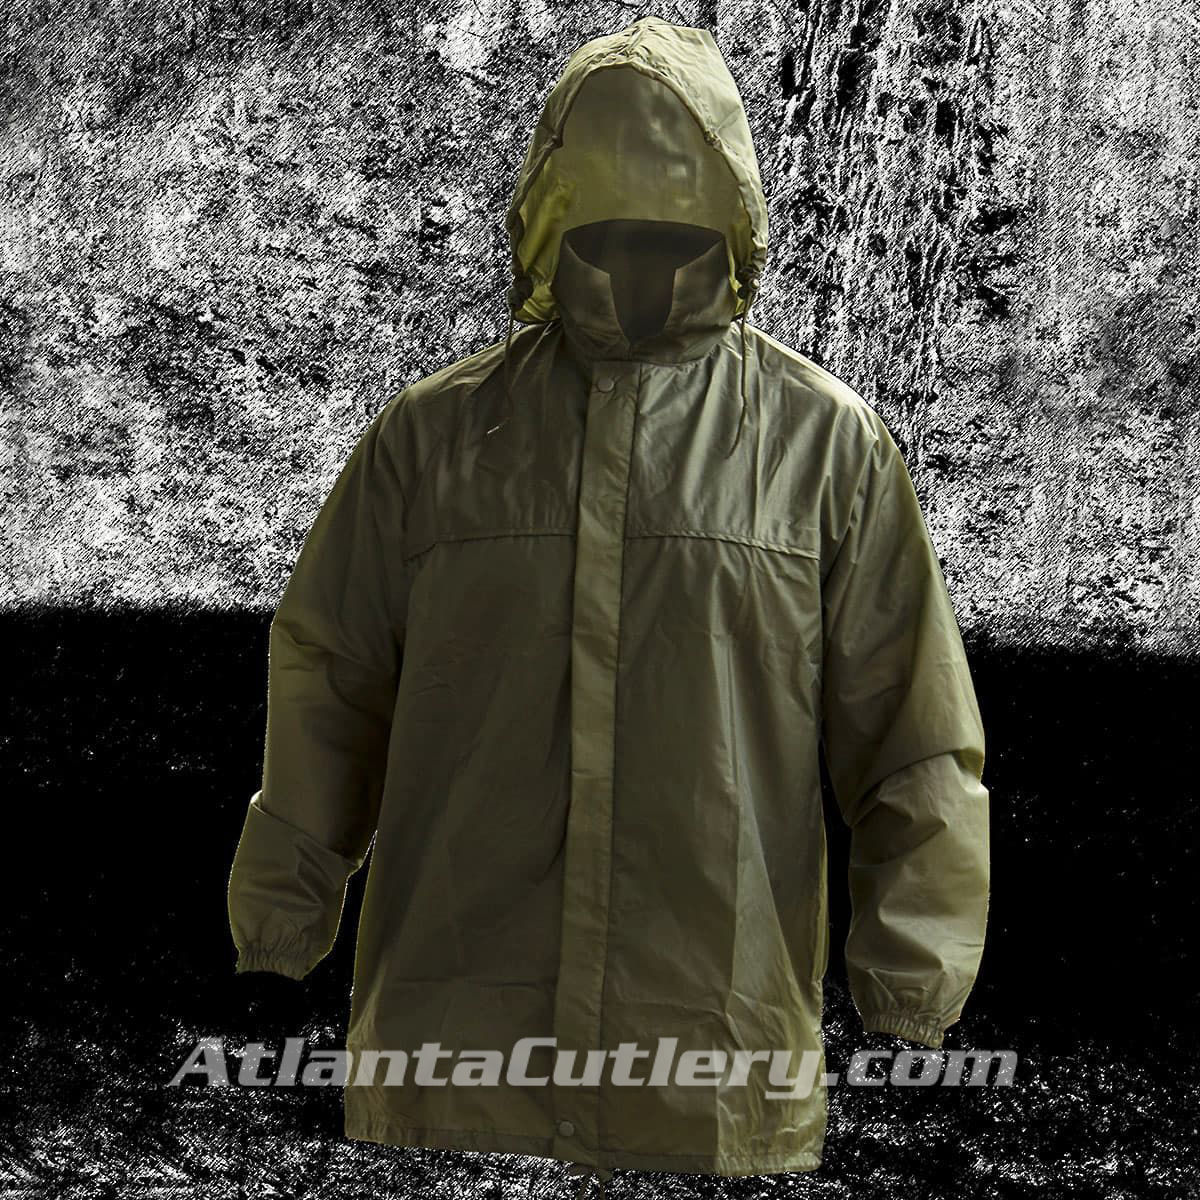 military surplus lightweight hooded jacket, rust-resistant nylon zipper with storm flap, elastic cuffs, drawstring waist, like new